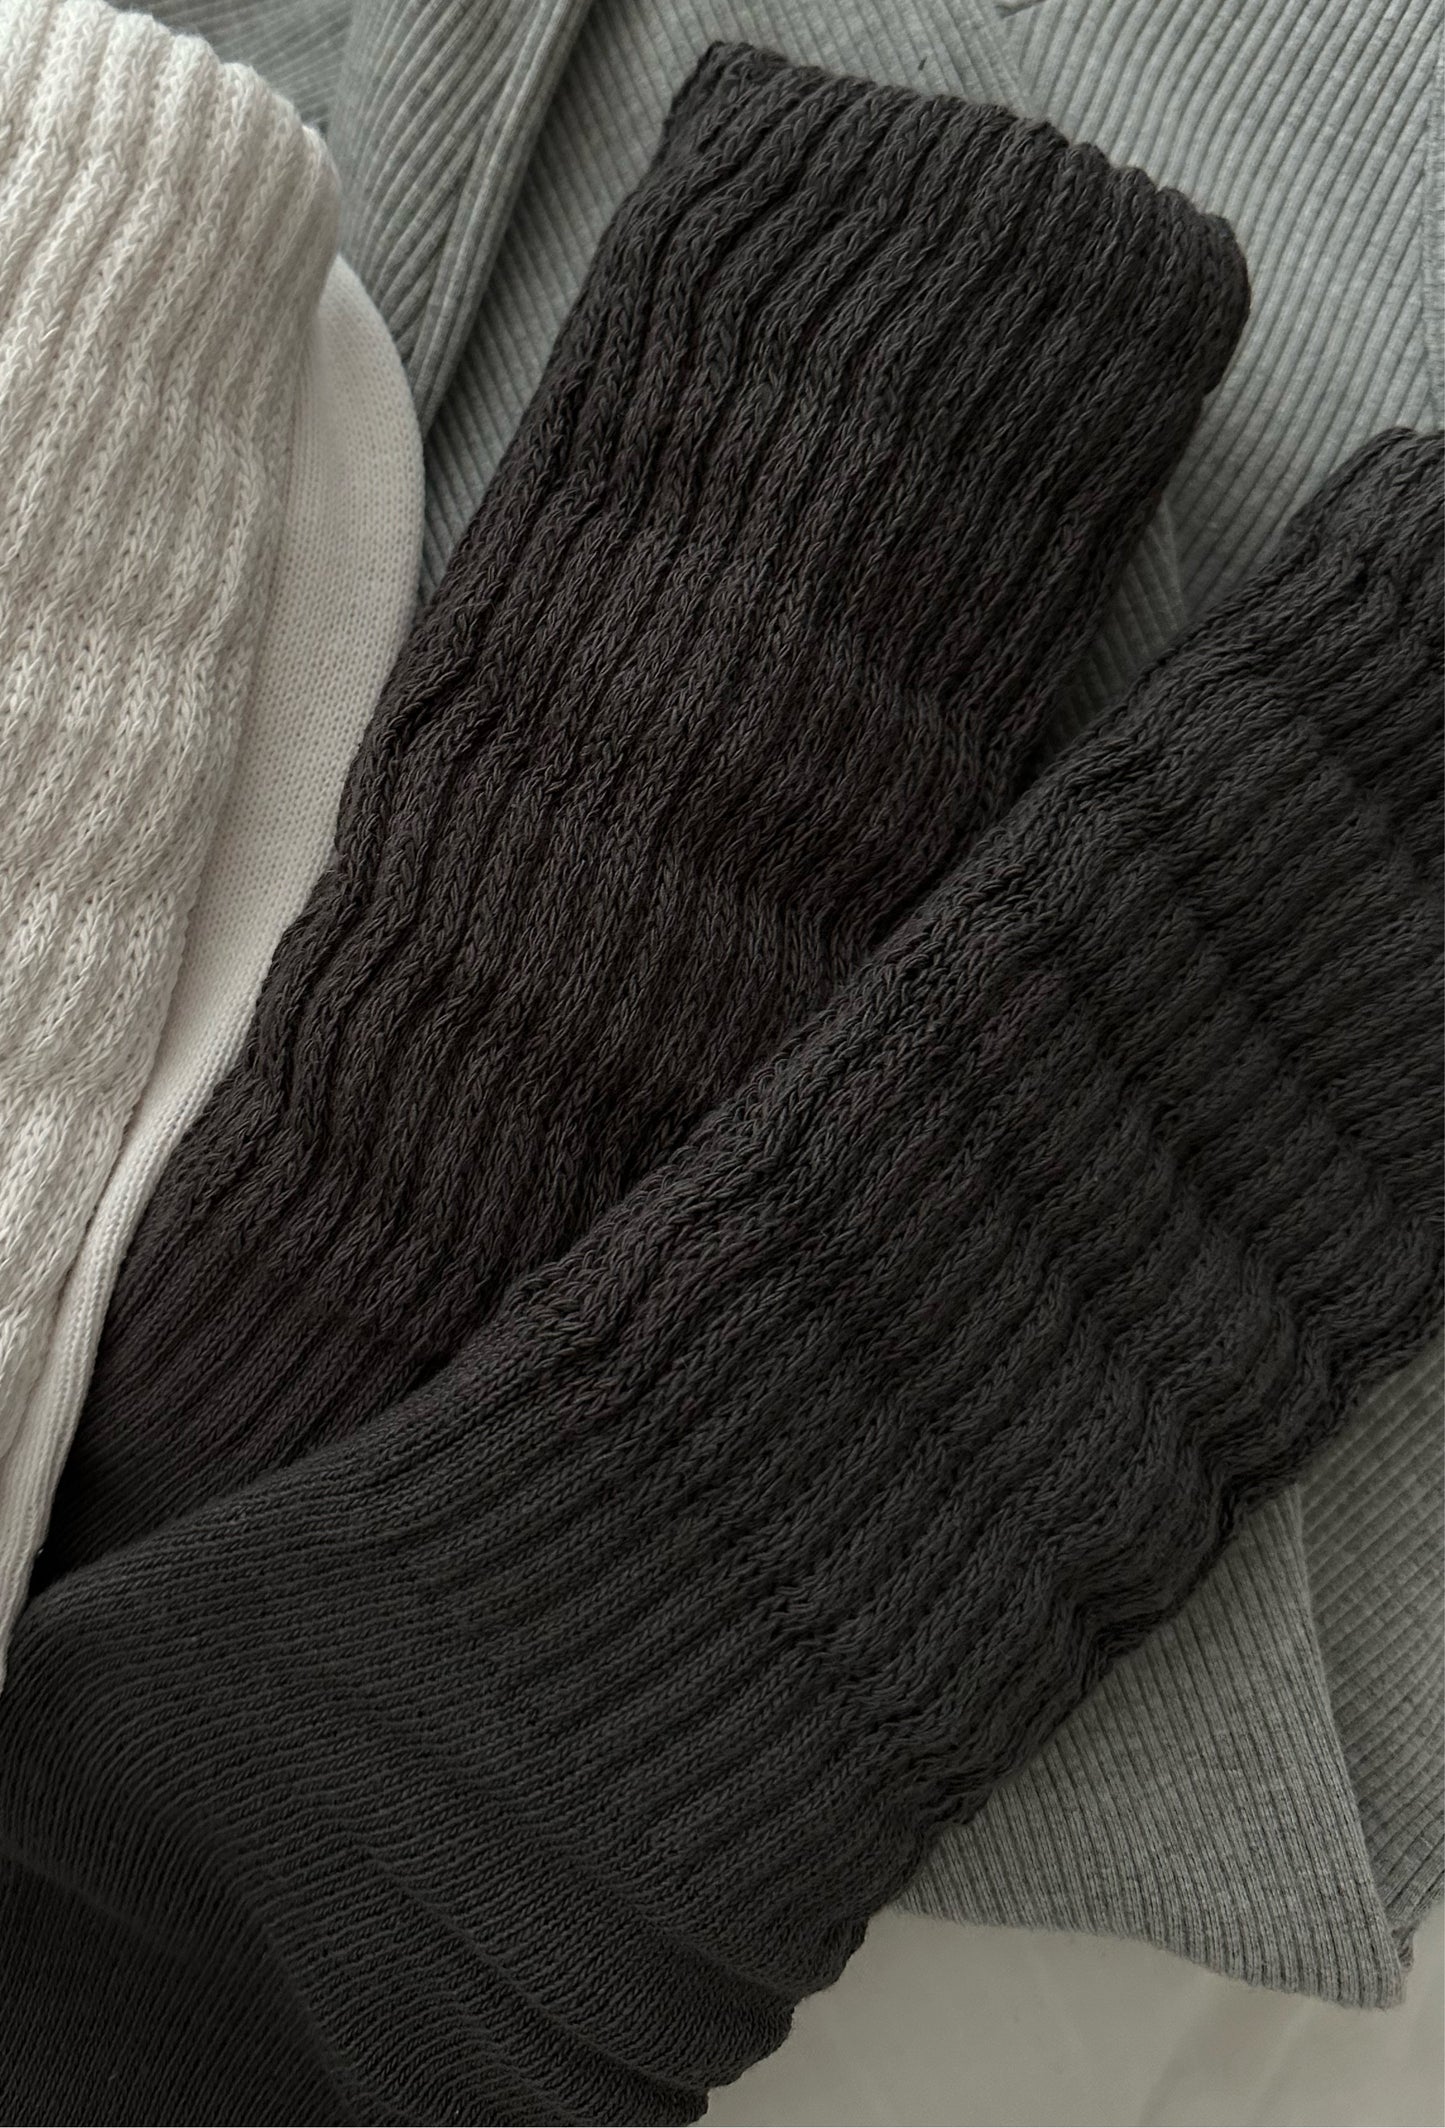 Charcoal Gray slouchy socks